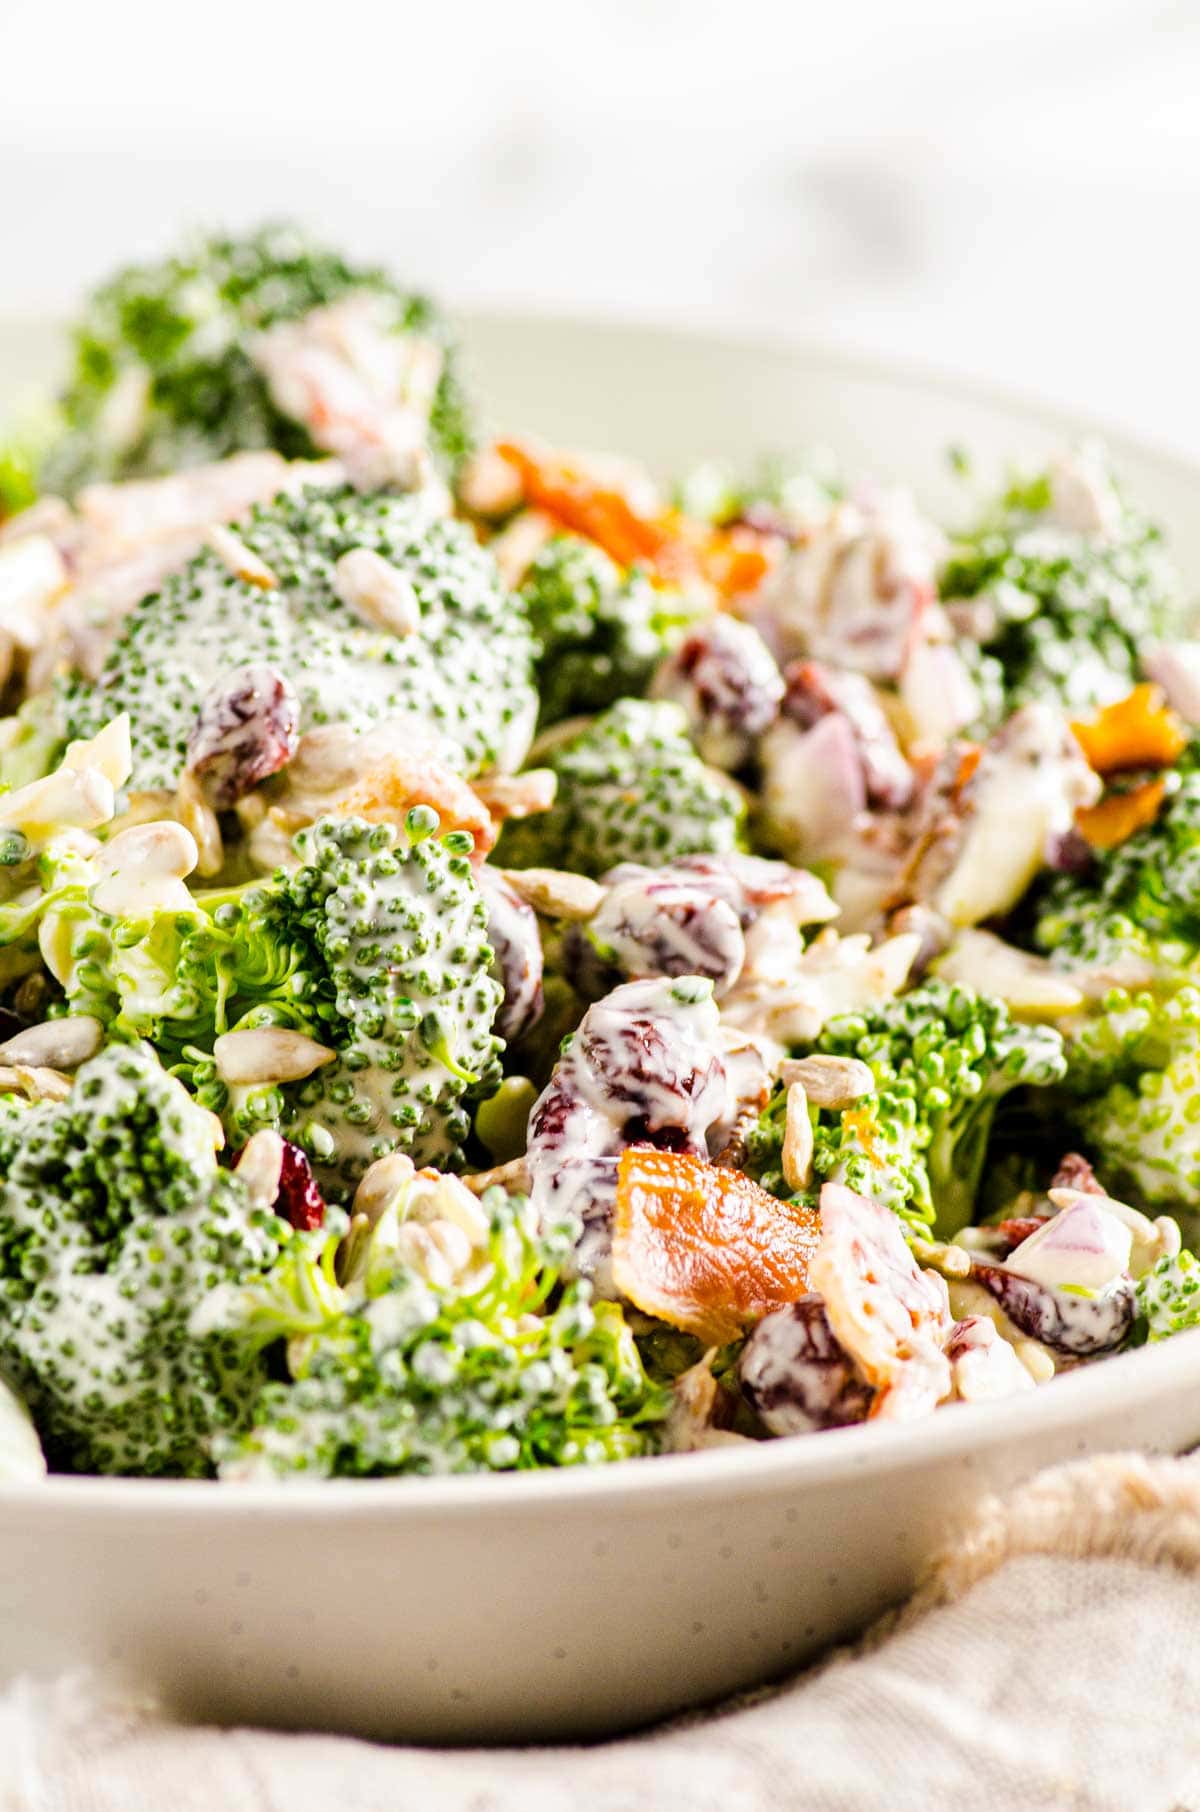 Healthy broccoli salad in white bowl.